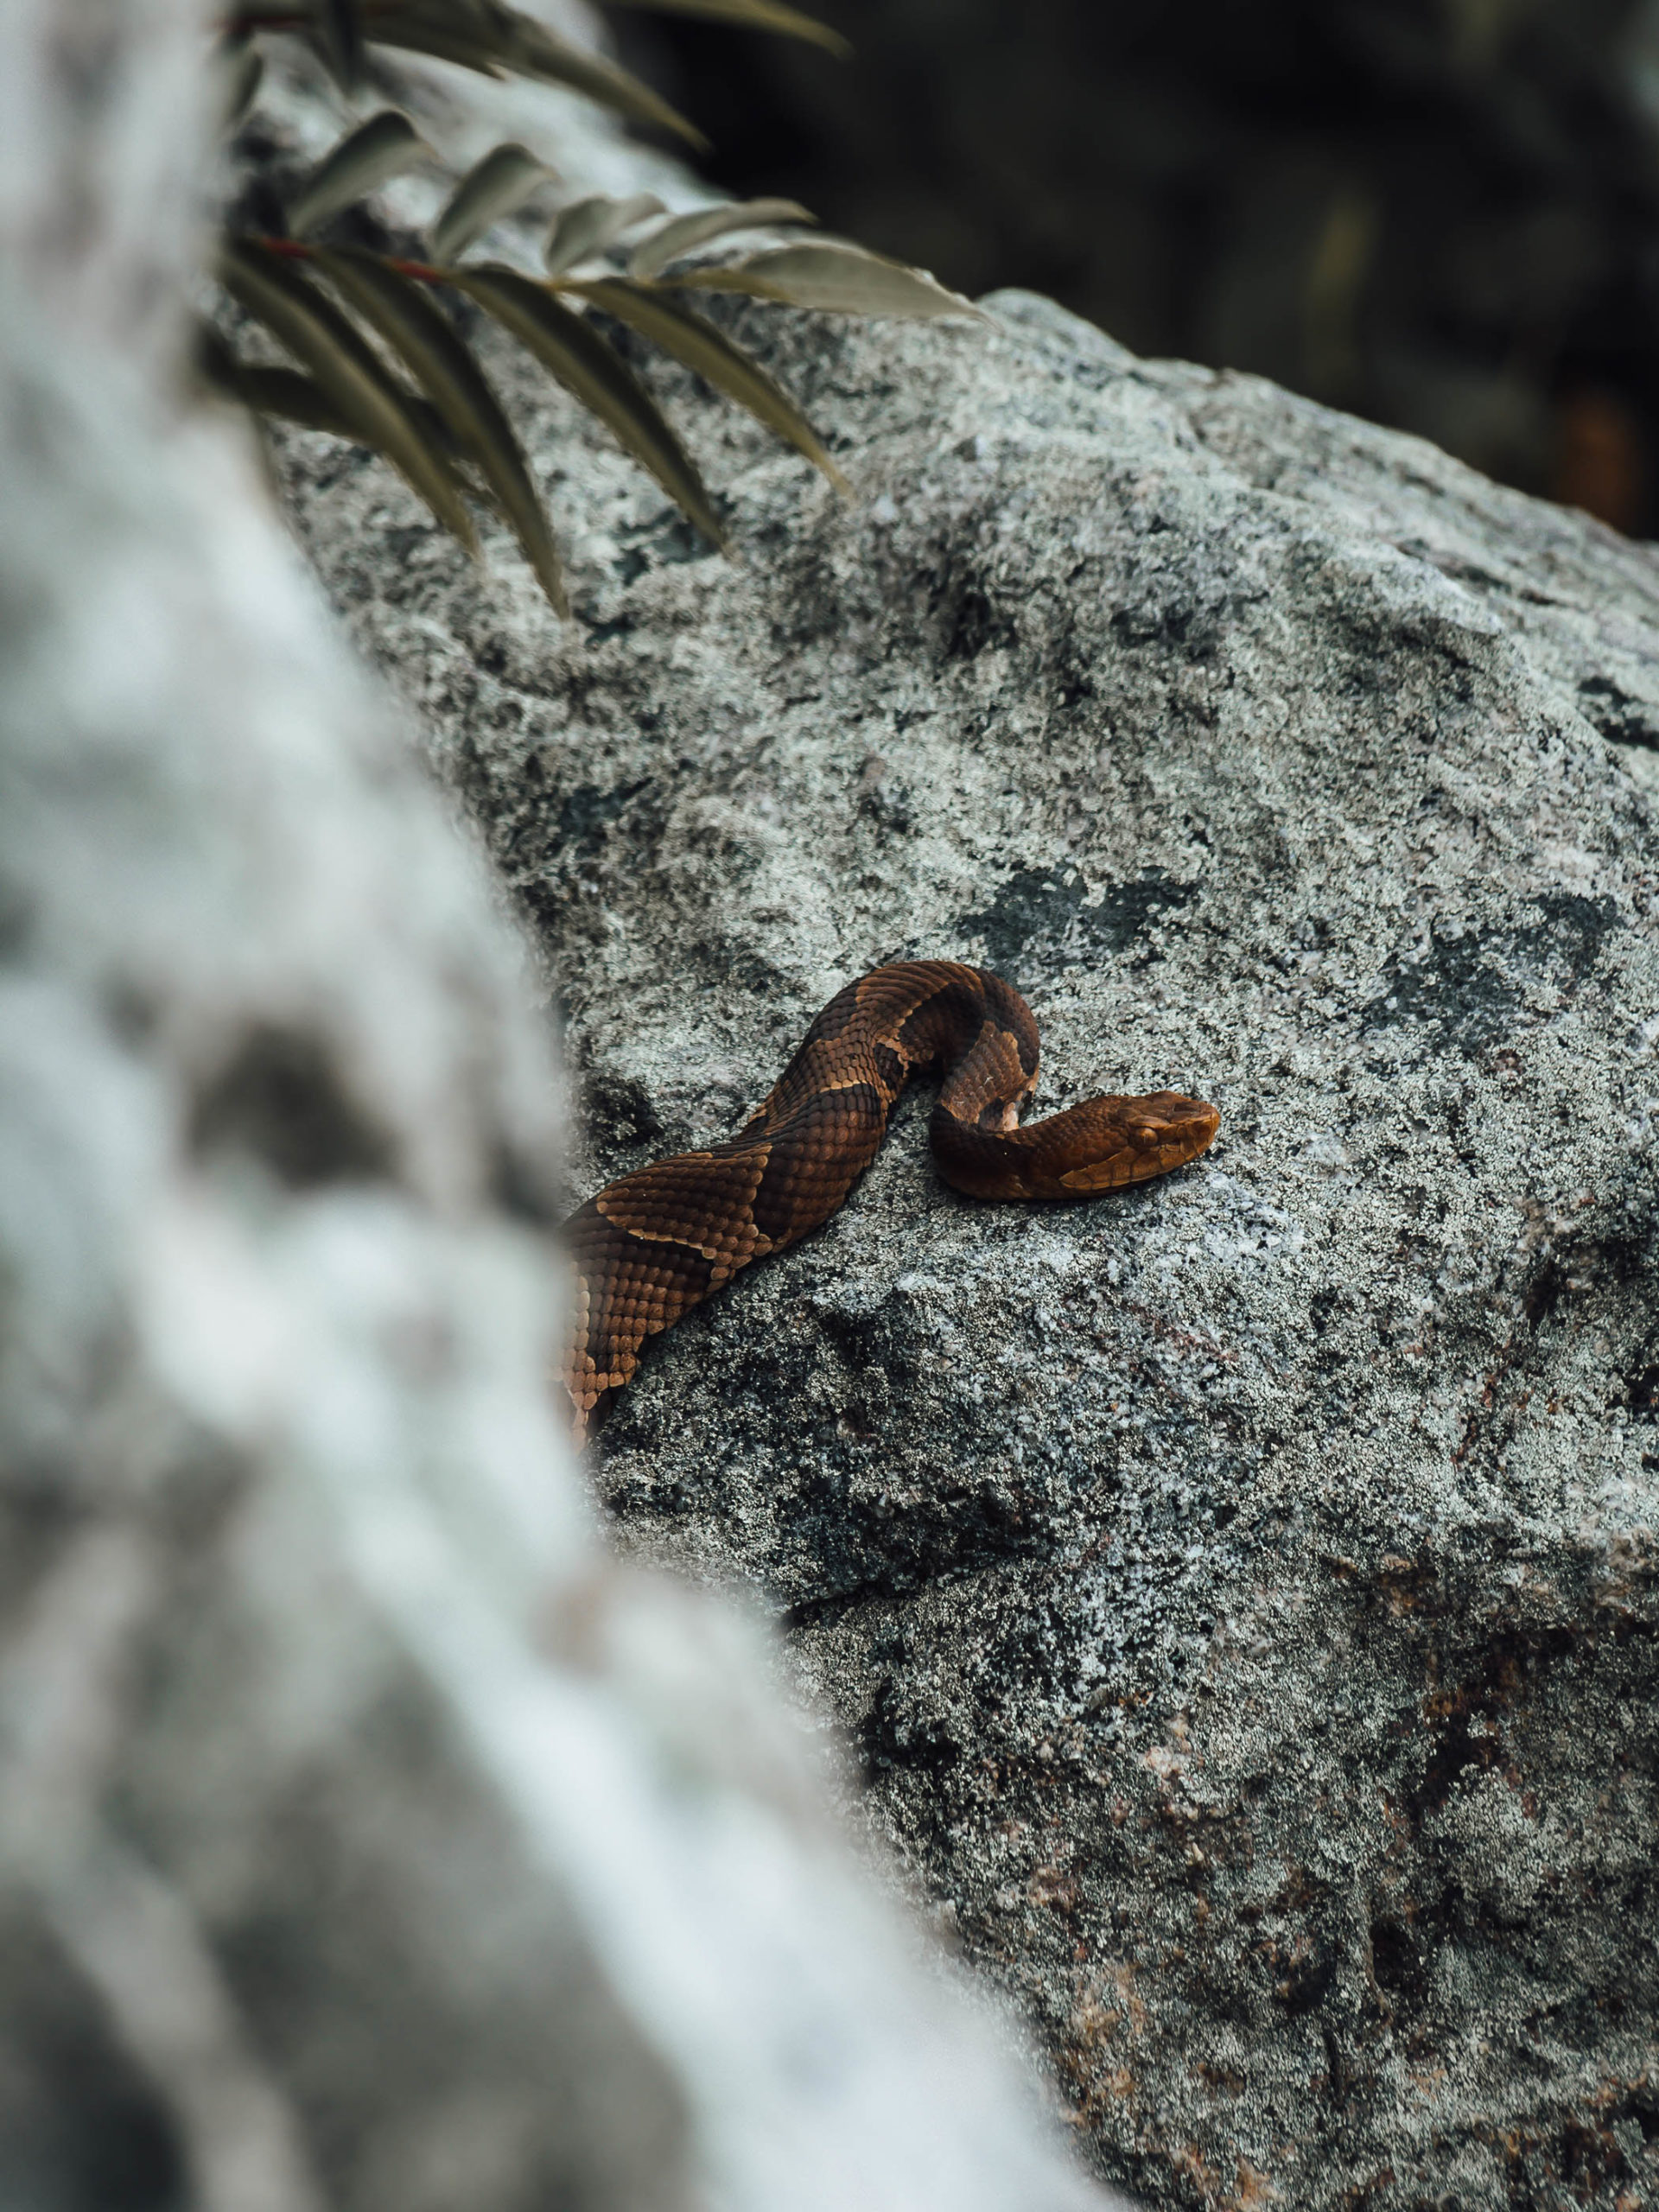 copperhead snake slithering along a rock